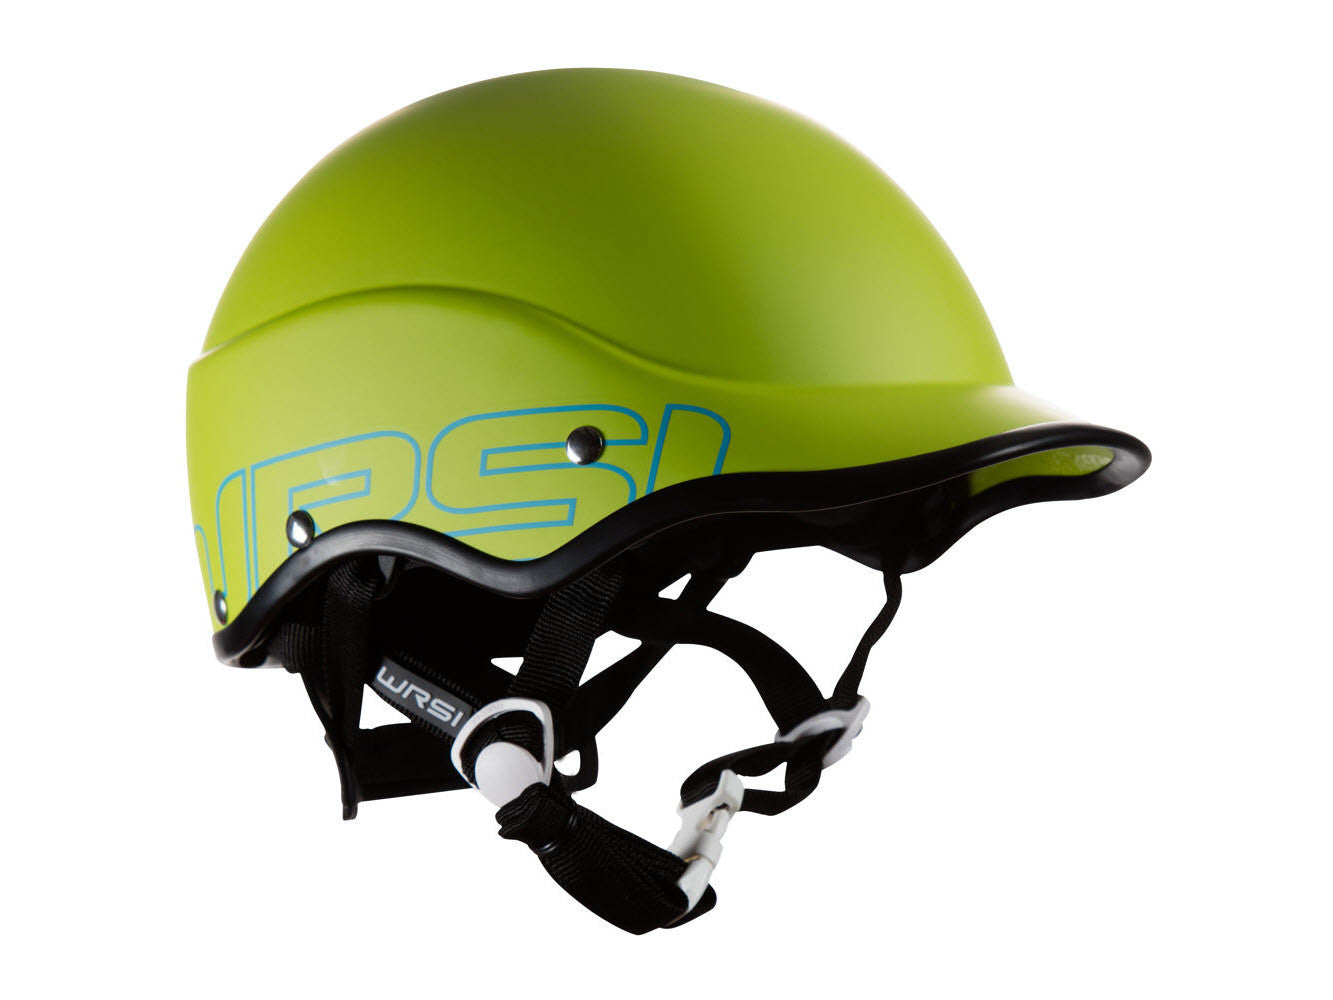 WRSI Trident Composite Helmet in G. Smith Green